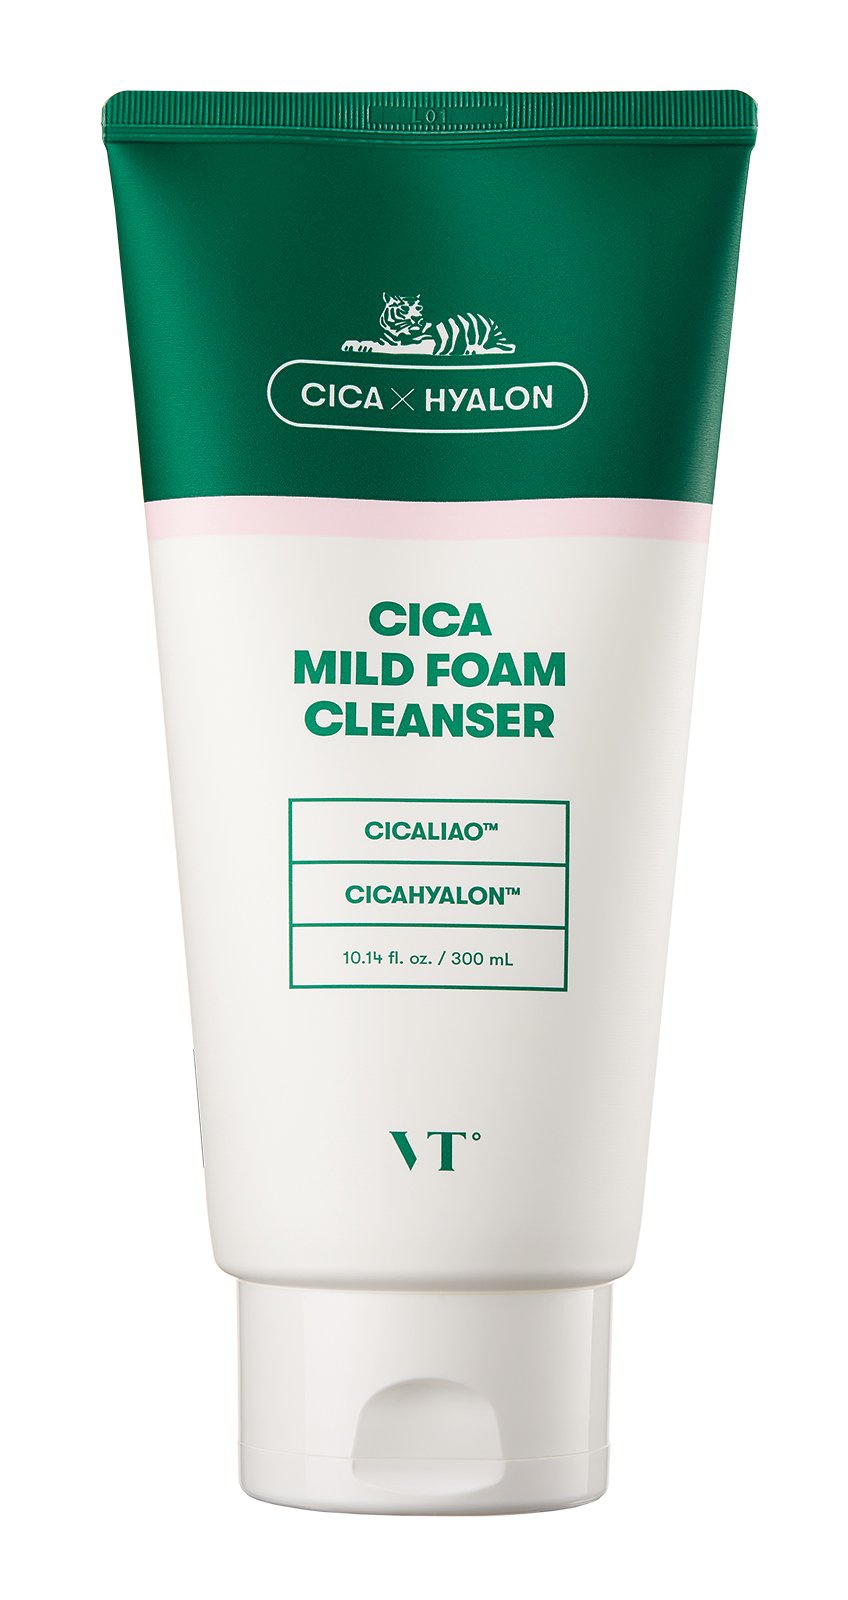 VT Cosmetics Cica Mild Foam Cleanser